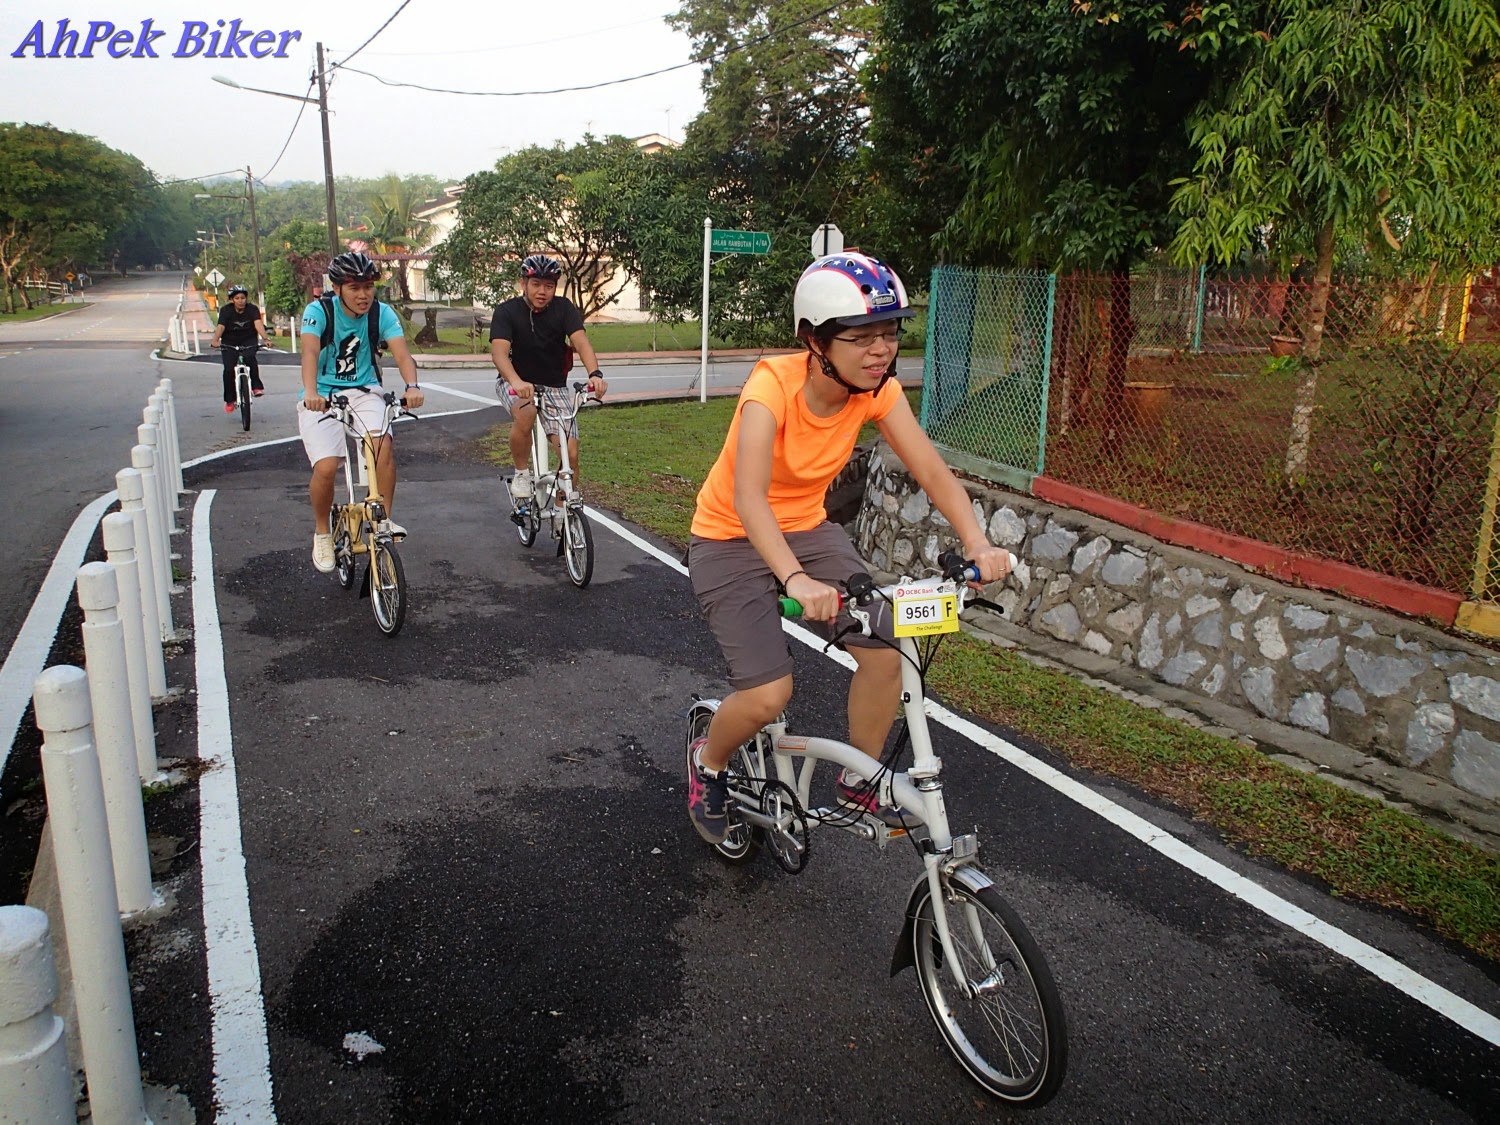 AhPek Biker  Old Dog Rides Again Selangor  Shah Alam Cycling Lanes